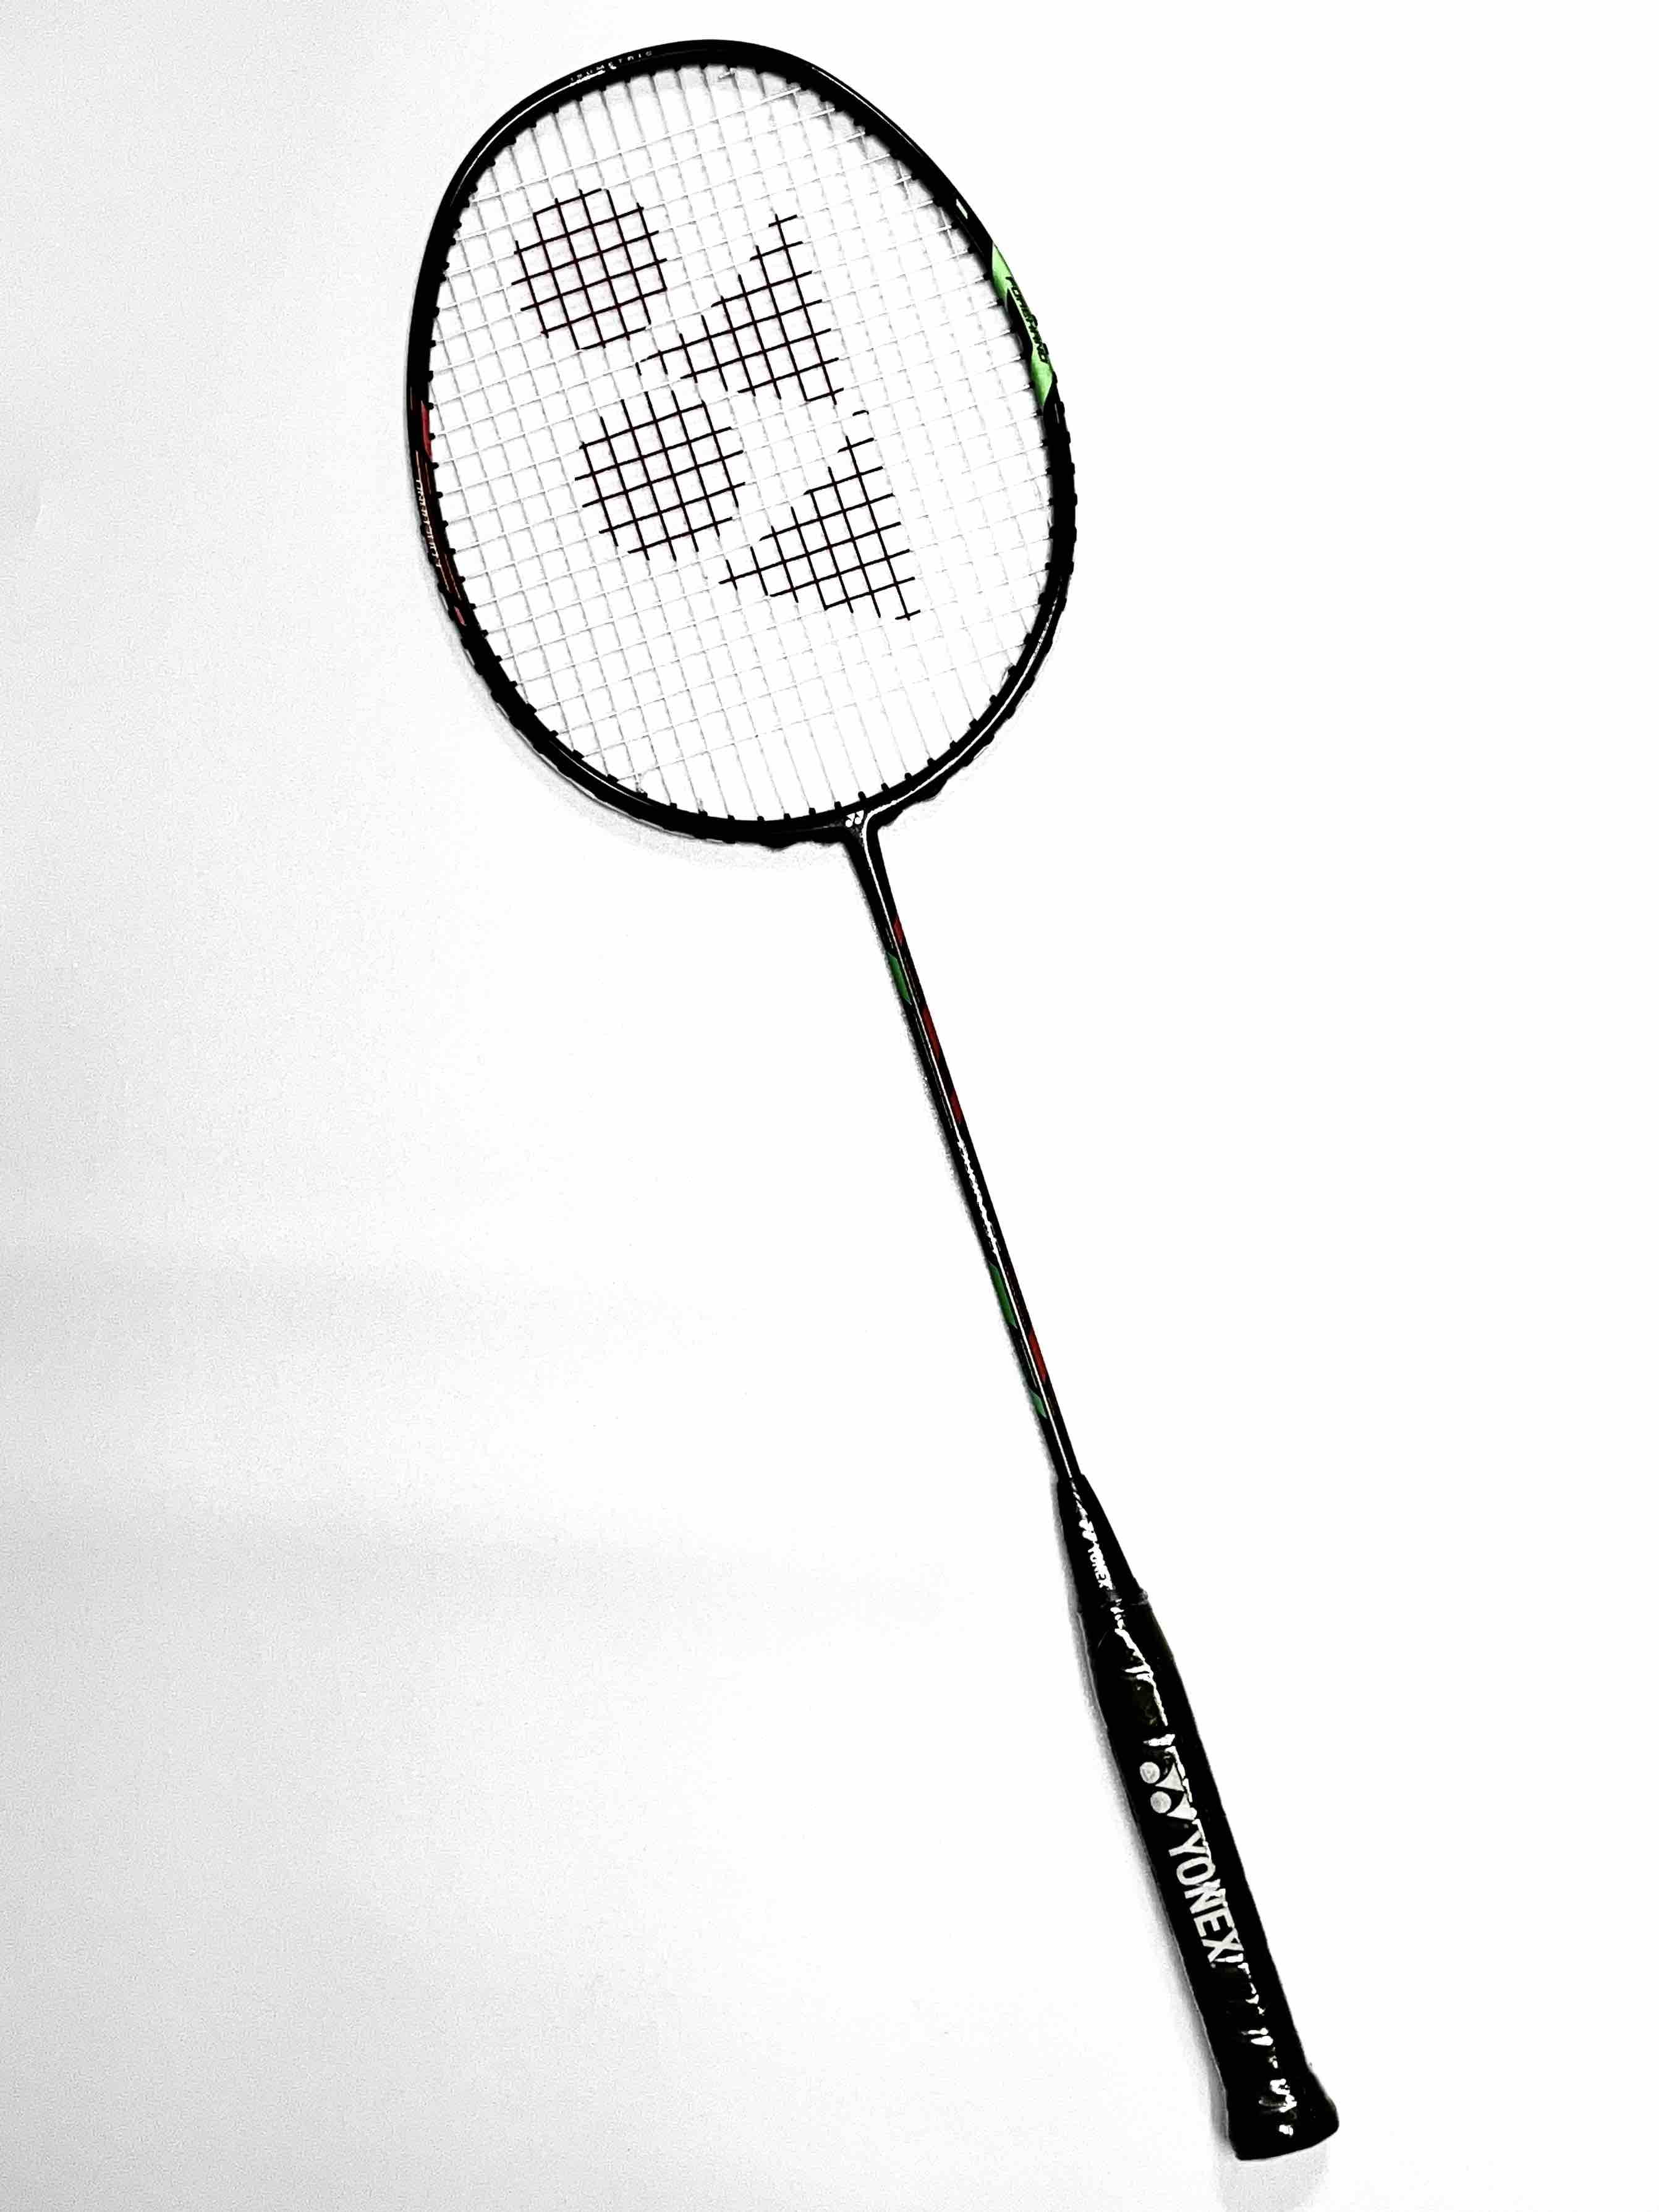 Hot Arrival DUORA 77 Carbon badminton racket DUO 77 orange/Black Racket 